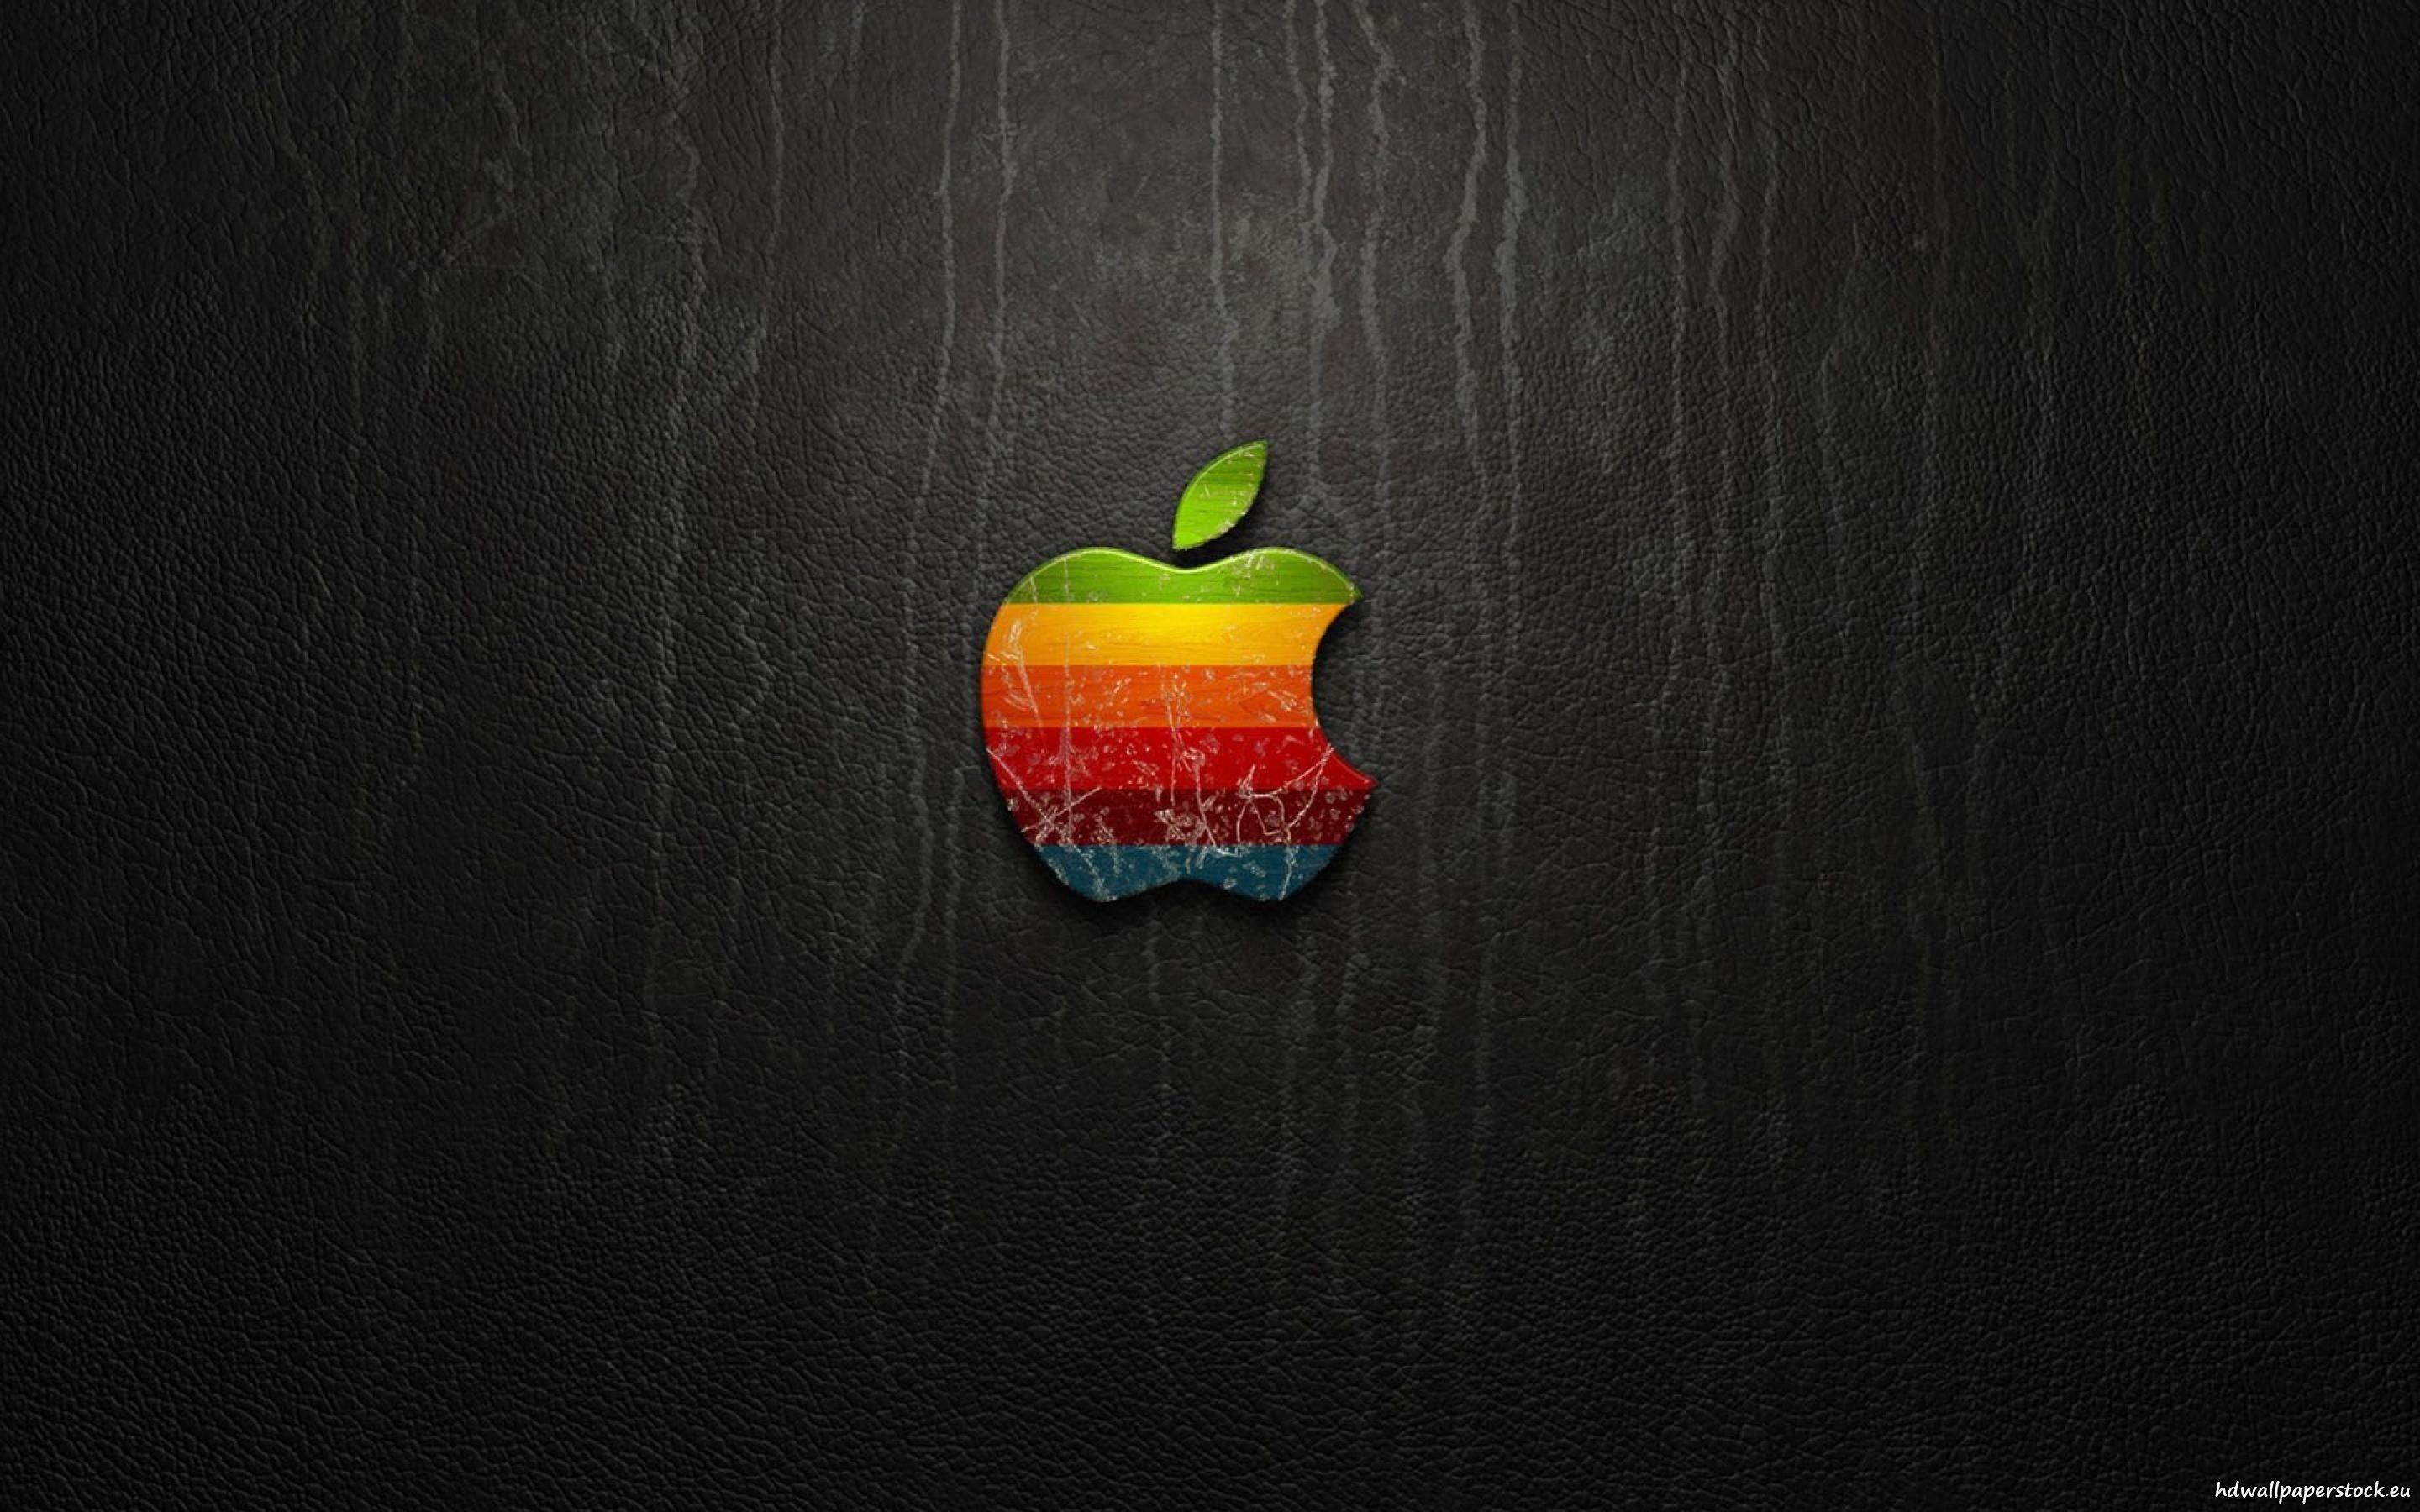 Apple Logo Desktop Wallpapers - Top Free Apple Logo Desktop Backgrounds ...